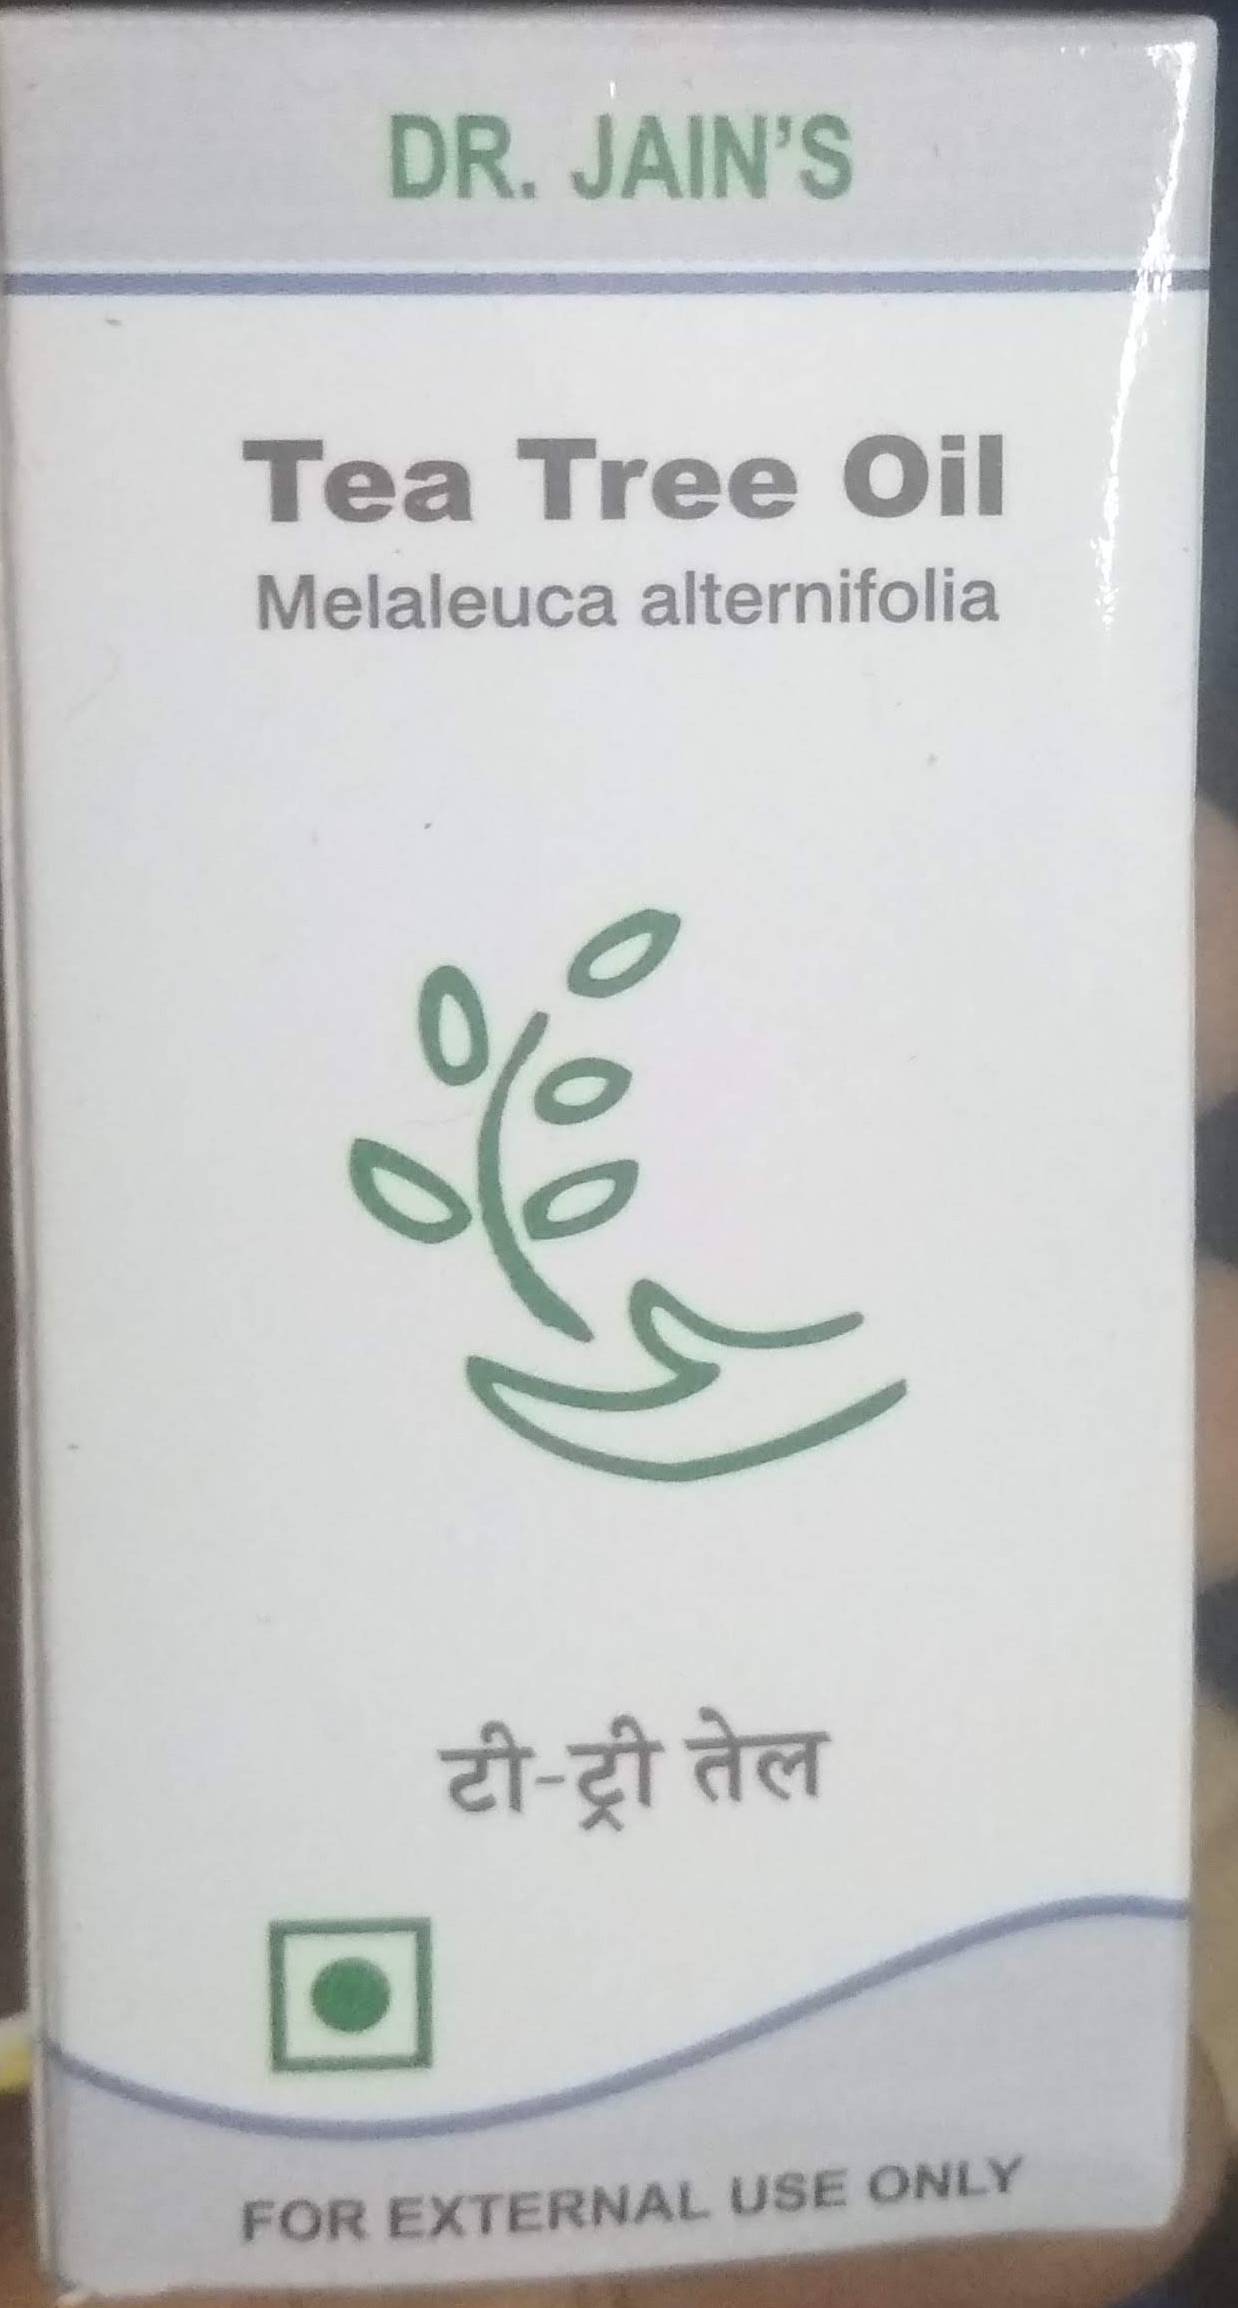 Tea Tree Oil 10ml upto 10% off Dr Jains Forest Herbals